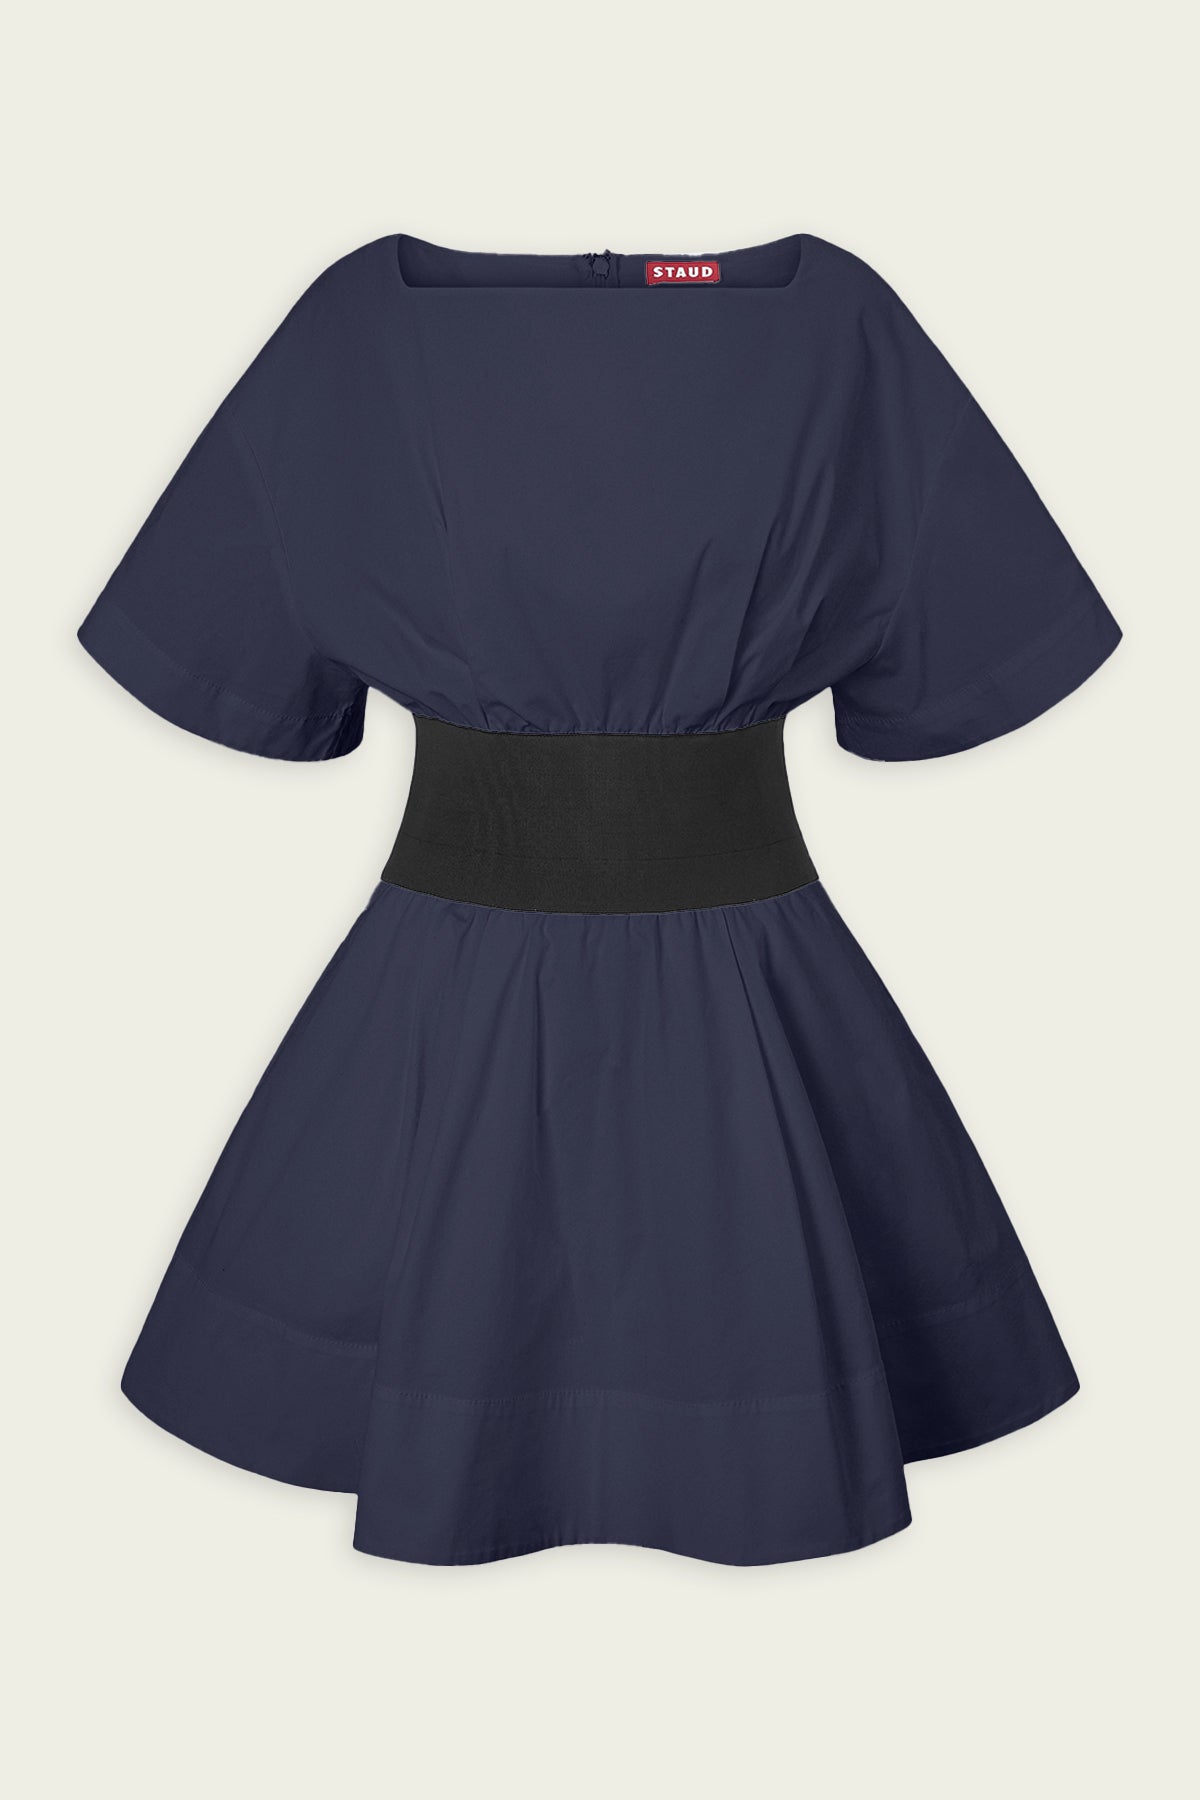 Amy Mini Dress in Navy Black - shop-olivia.com